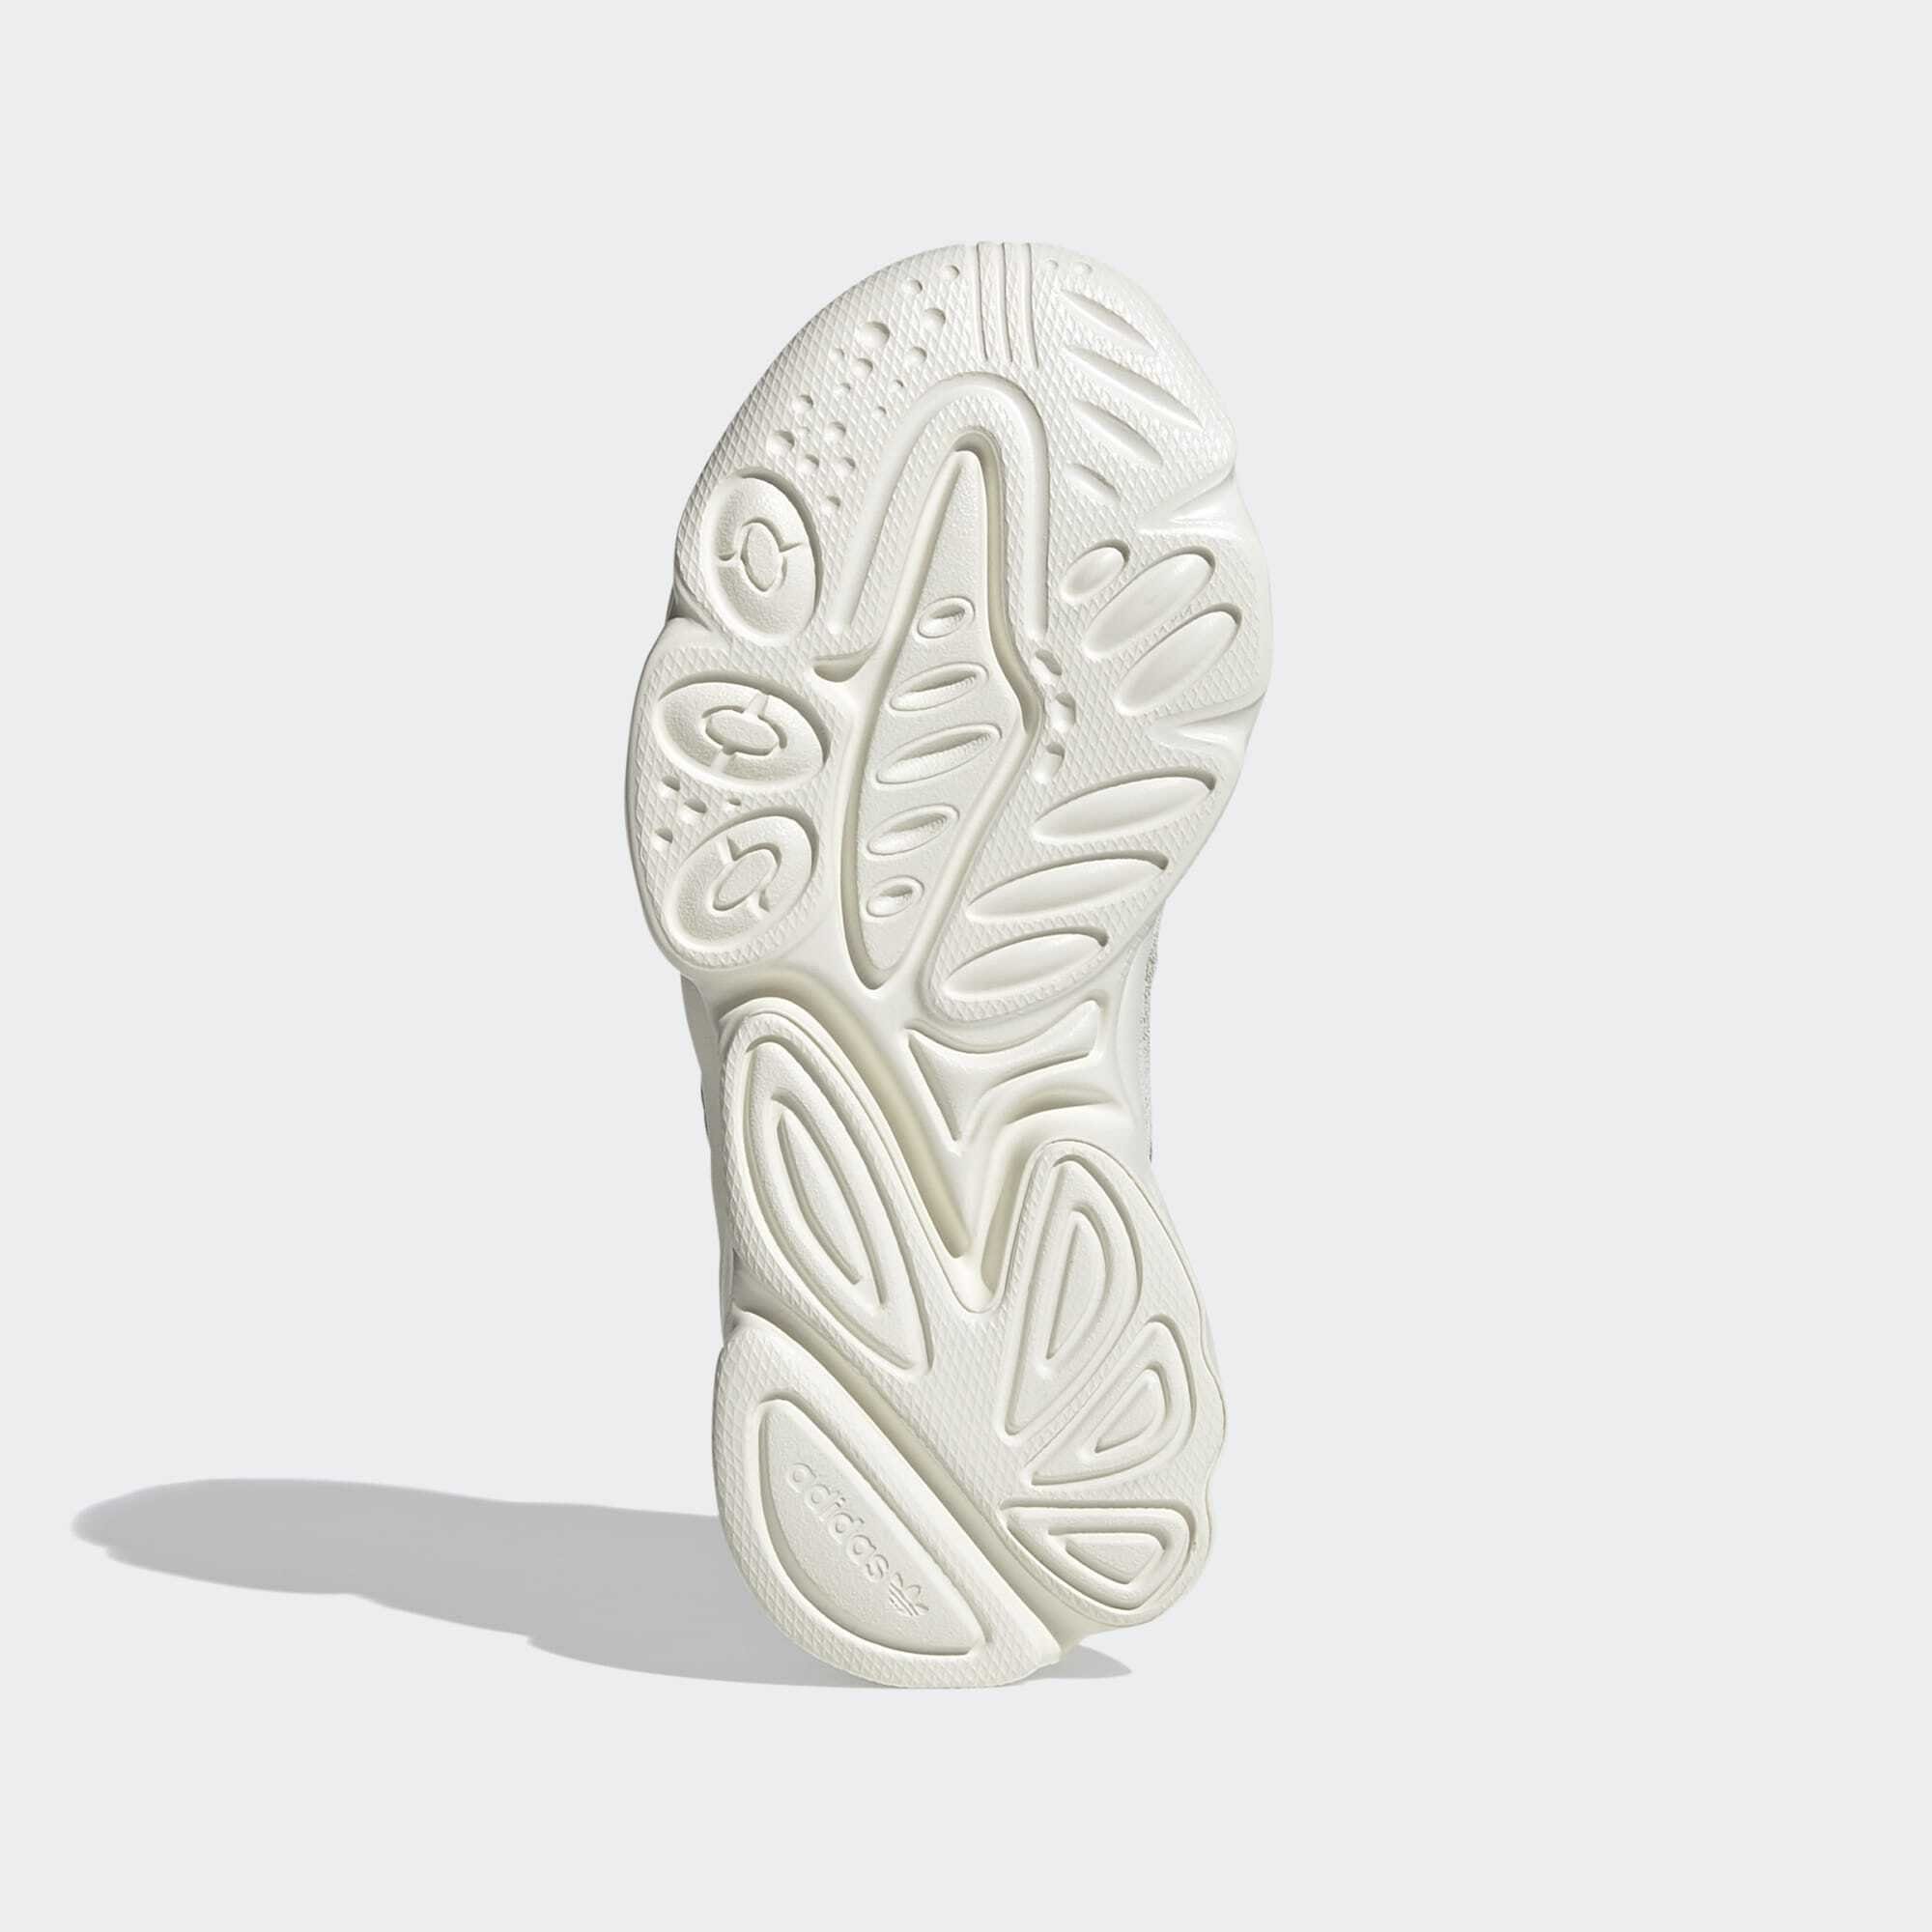 adidas Originals OZWEEGO Crystal / Off Sneaker / Cloud White SCHUH White White